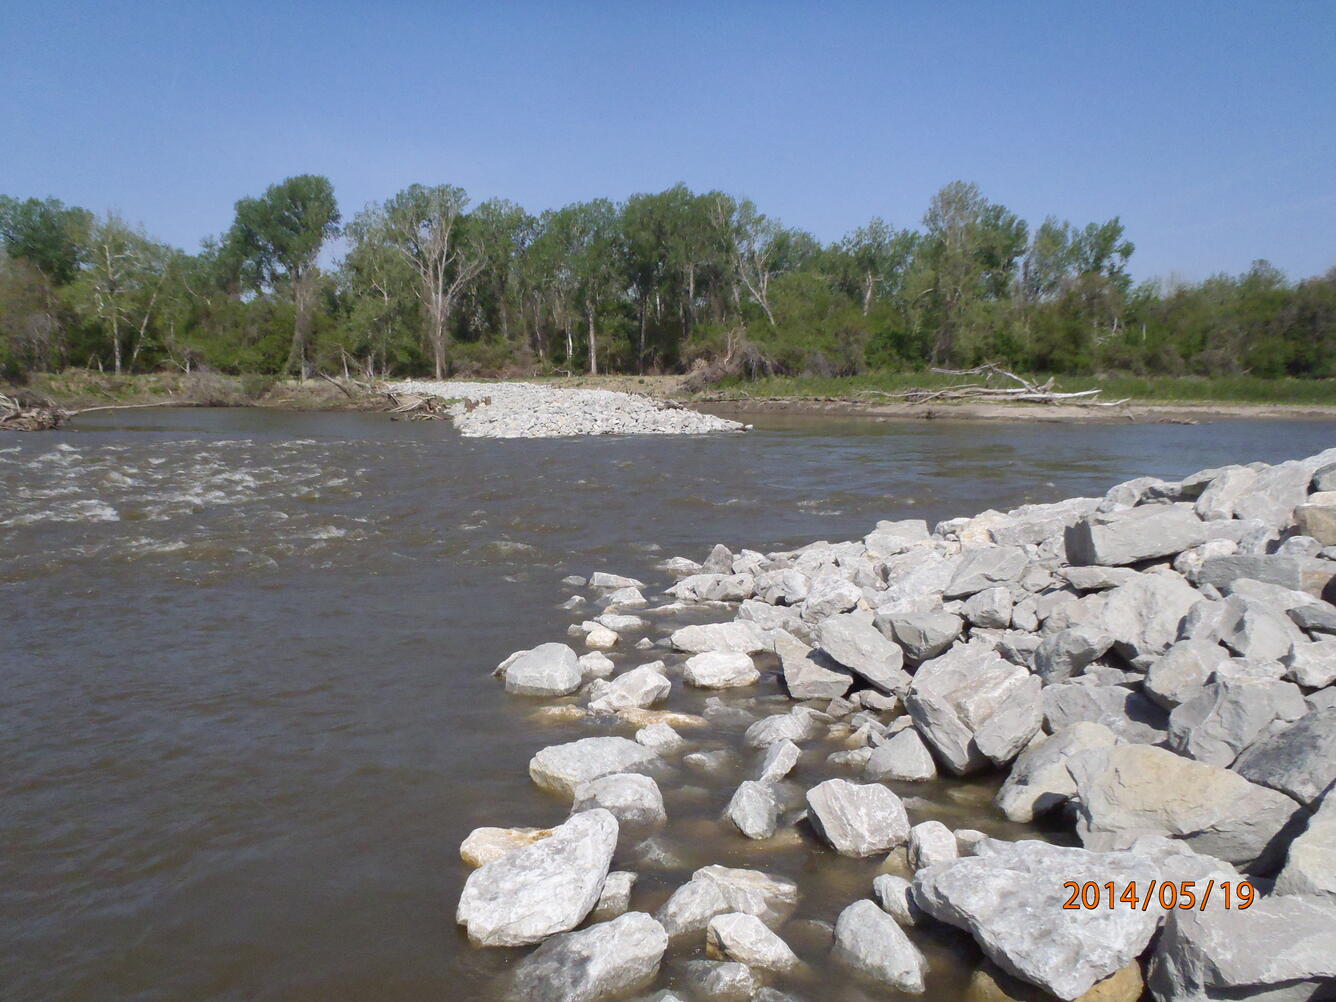 Constructed chute along the Missouri River in Nebraska